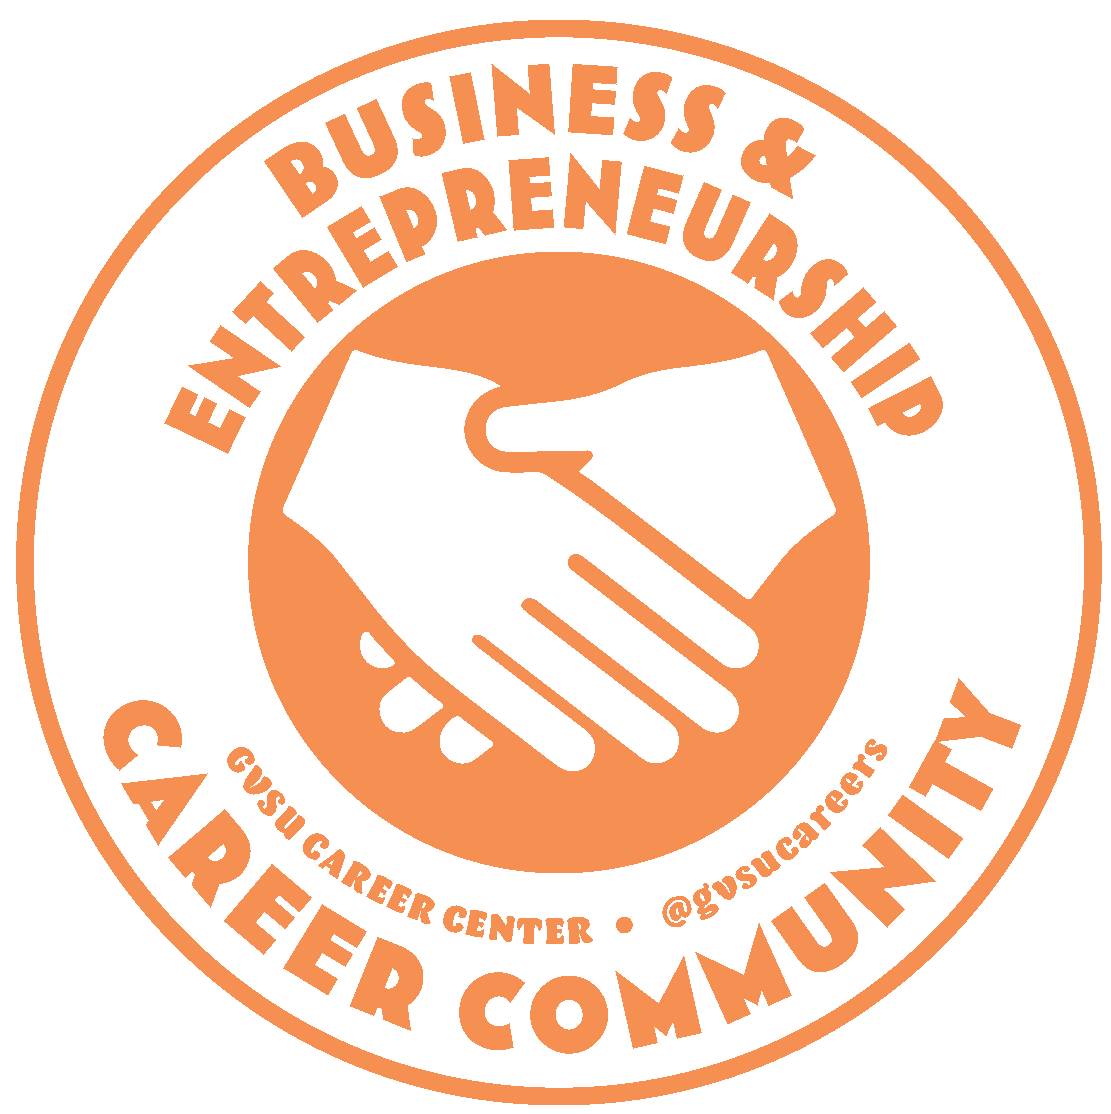 Business and entrepreneurship career community